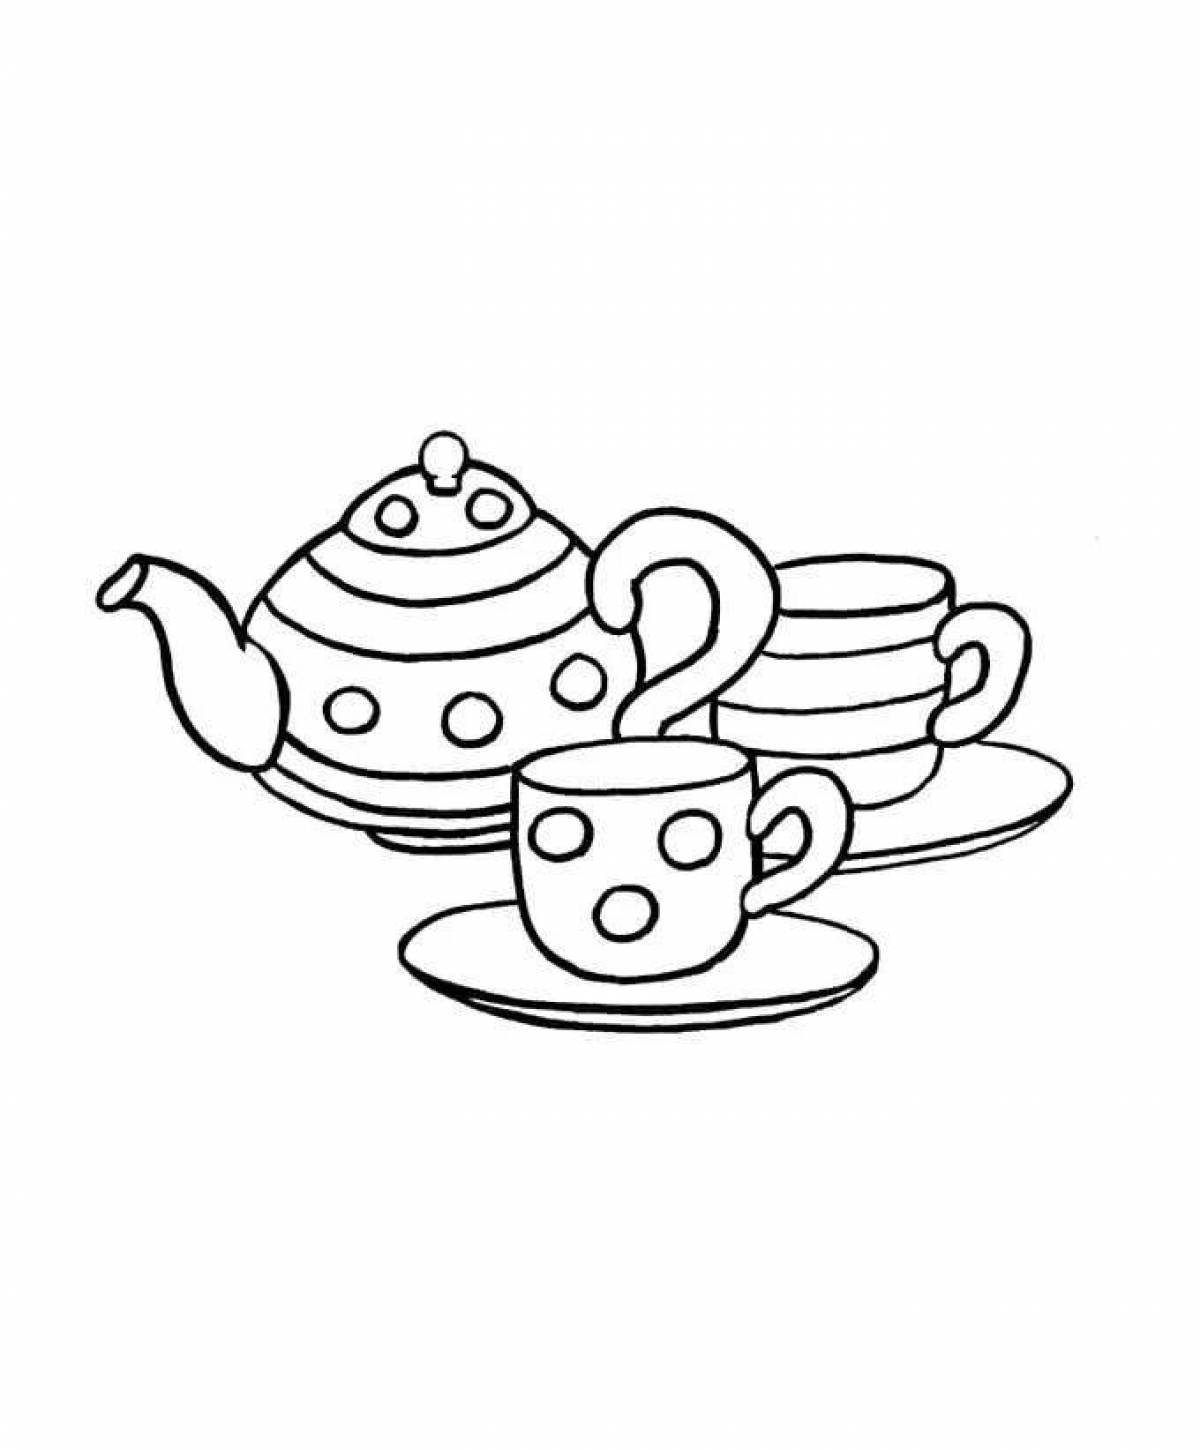 Kaleidoscopic teapot and cup coloring book